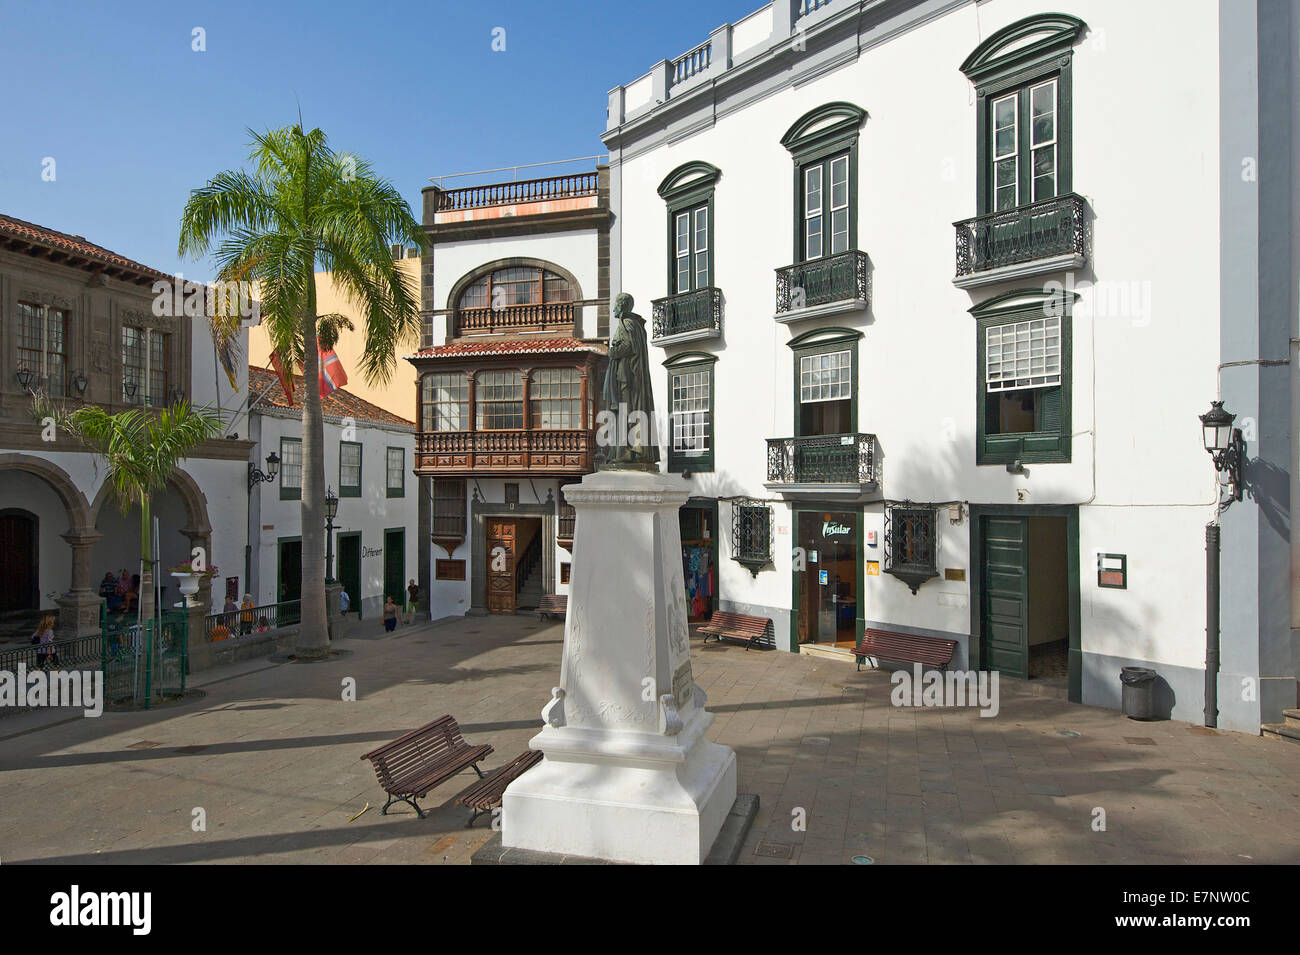 Kanaren, Kanarische Inseln, Inseln, La Palma, Spanien, Europa, draußen, Tag, niemand, Fassade, Tradition, traditionell, Balkon, bauen Stockfoto